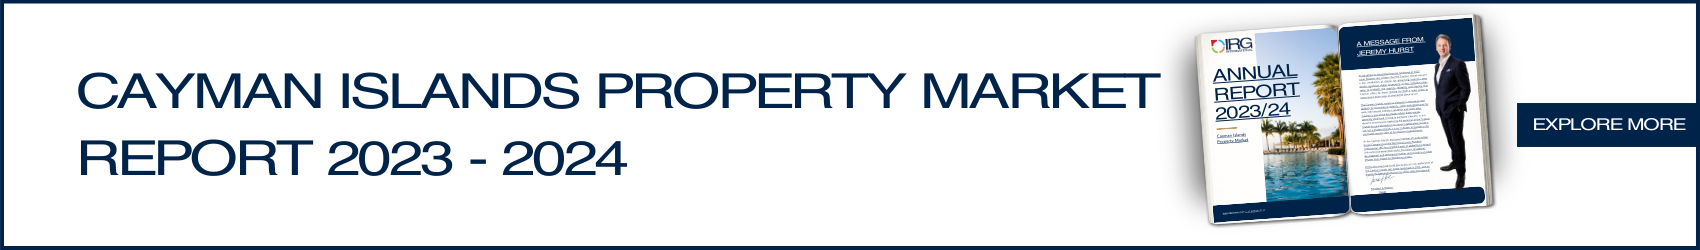 Cayman Islands Property Market Report 2023 - 2024